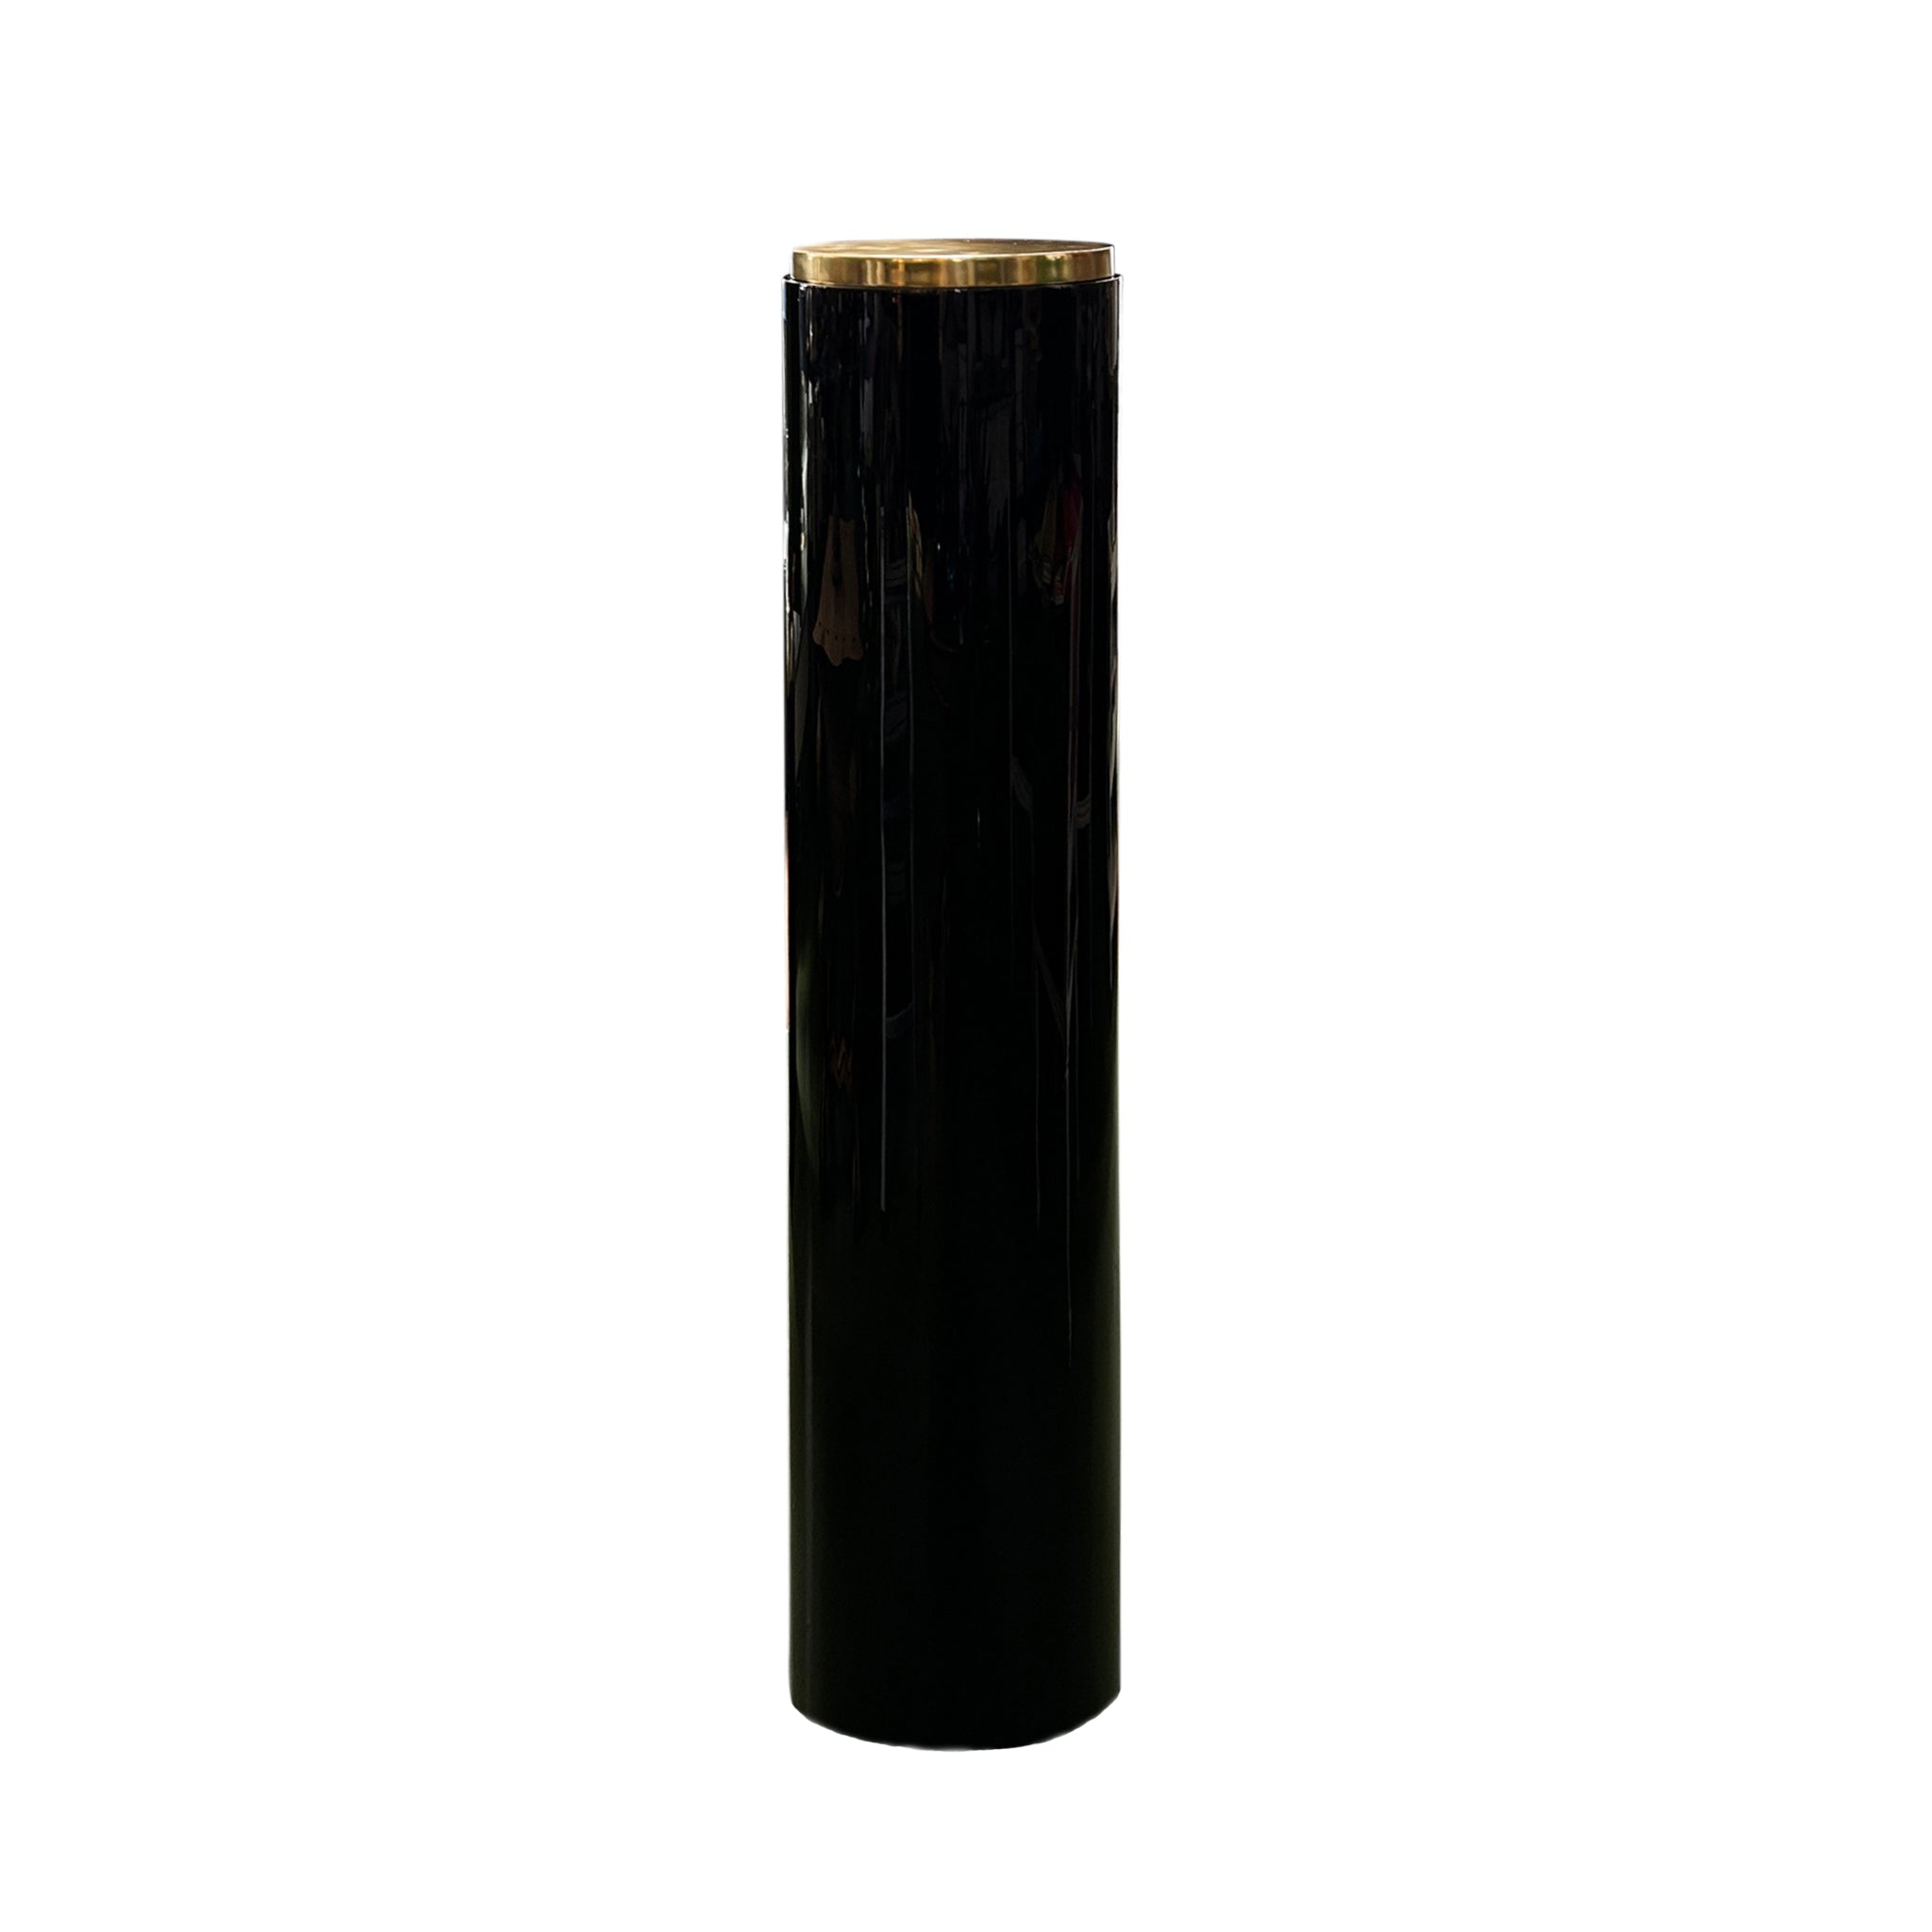 Round Licorice Black with Polished Brass Pedestal